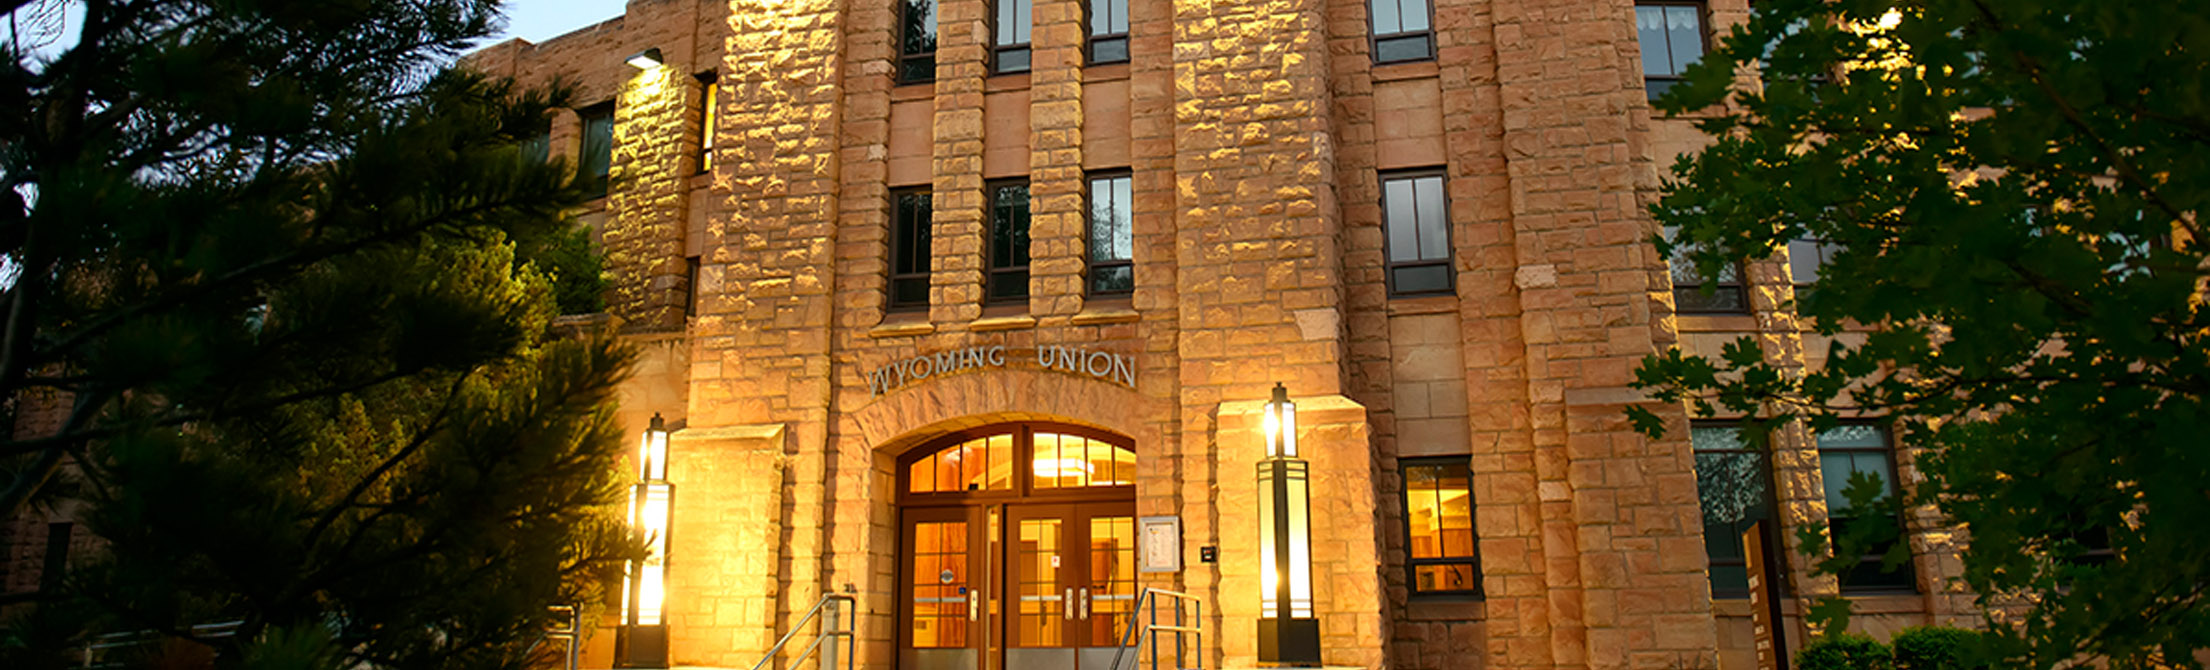 Photo of Wyoming Union